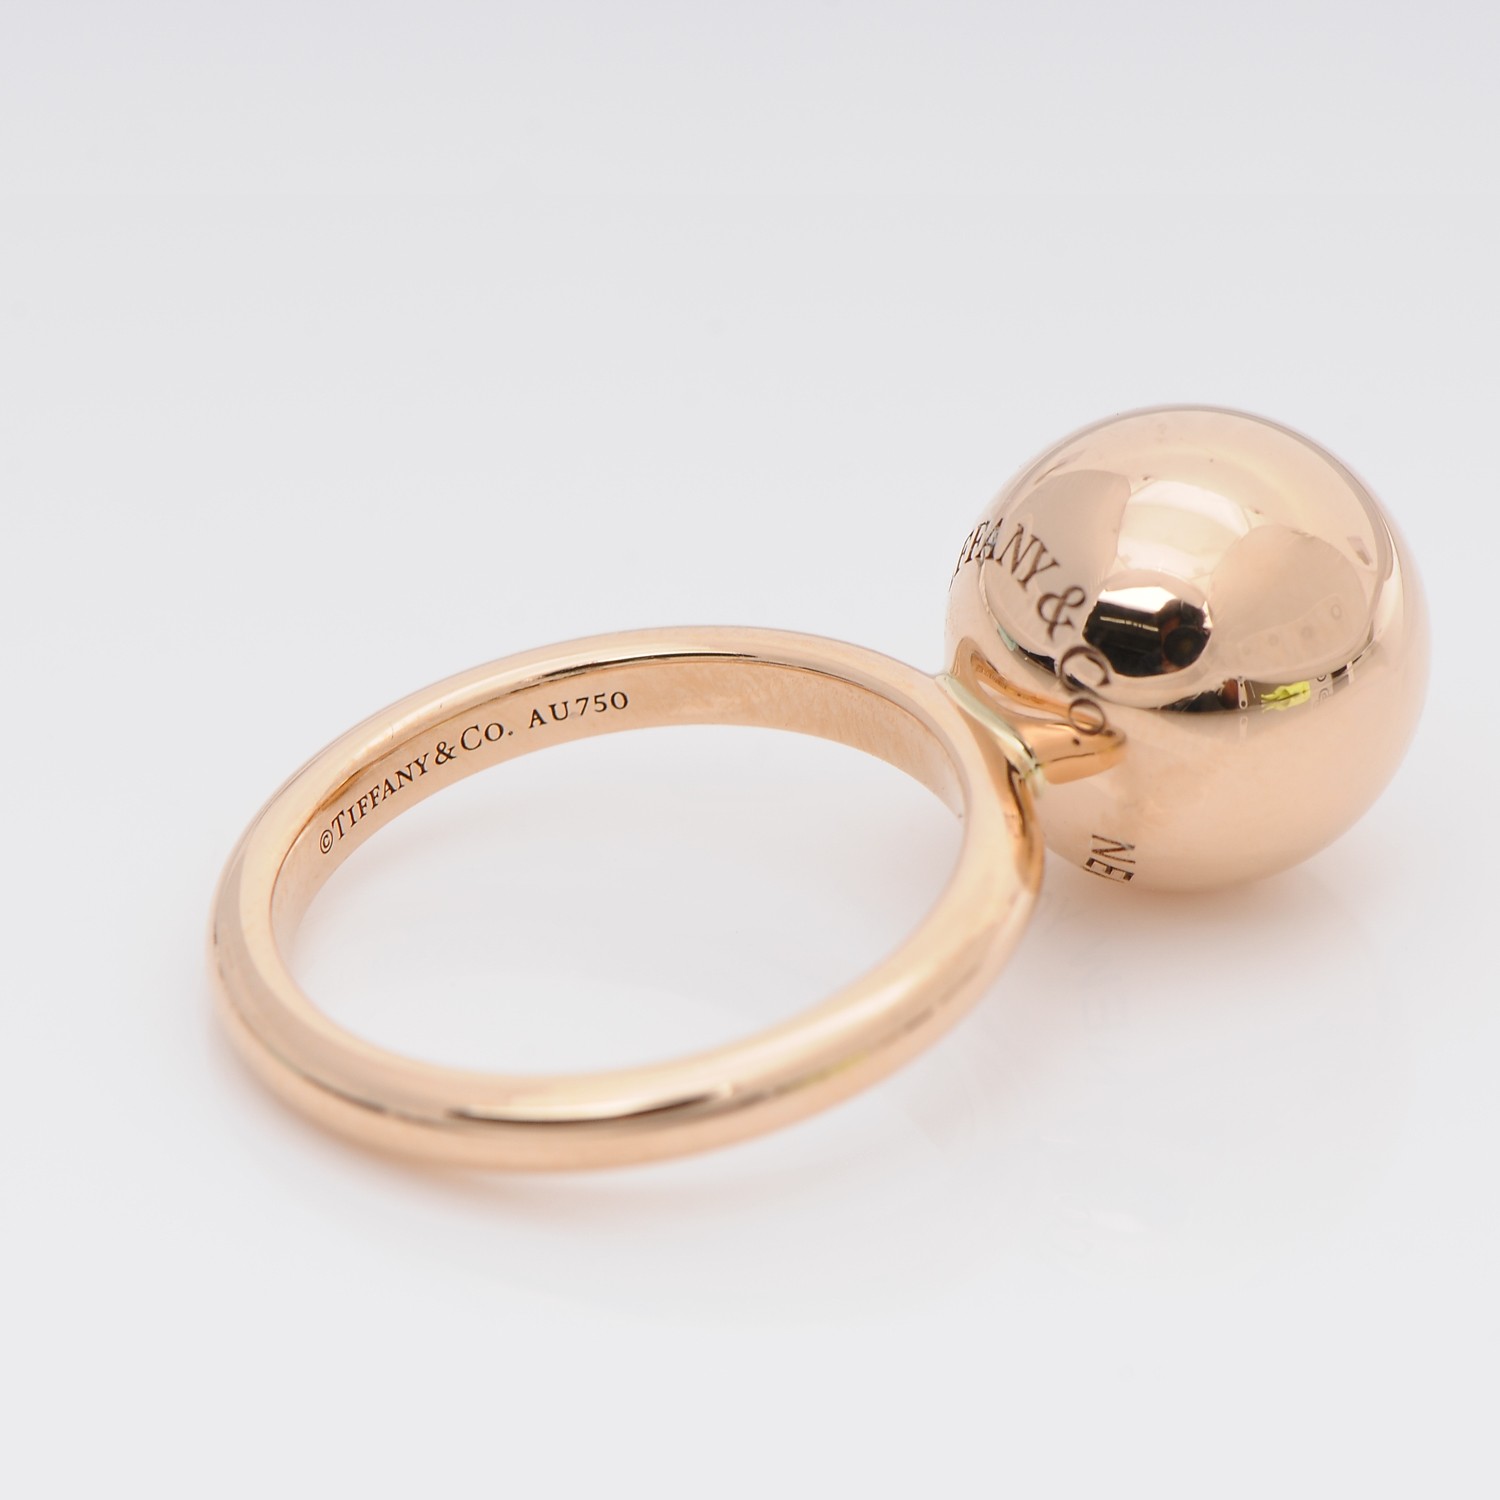 tiffany gold ball ring